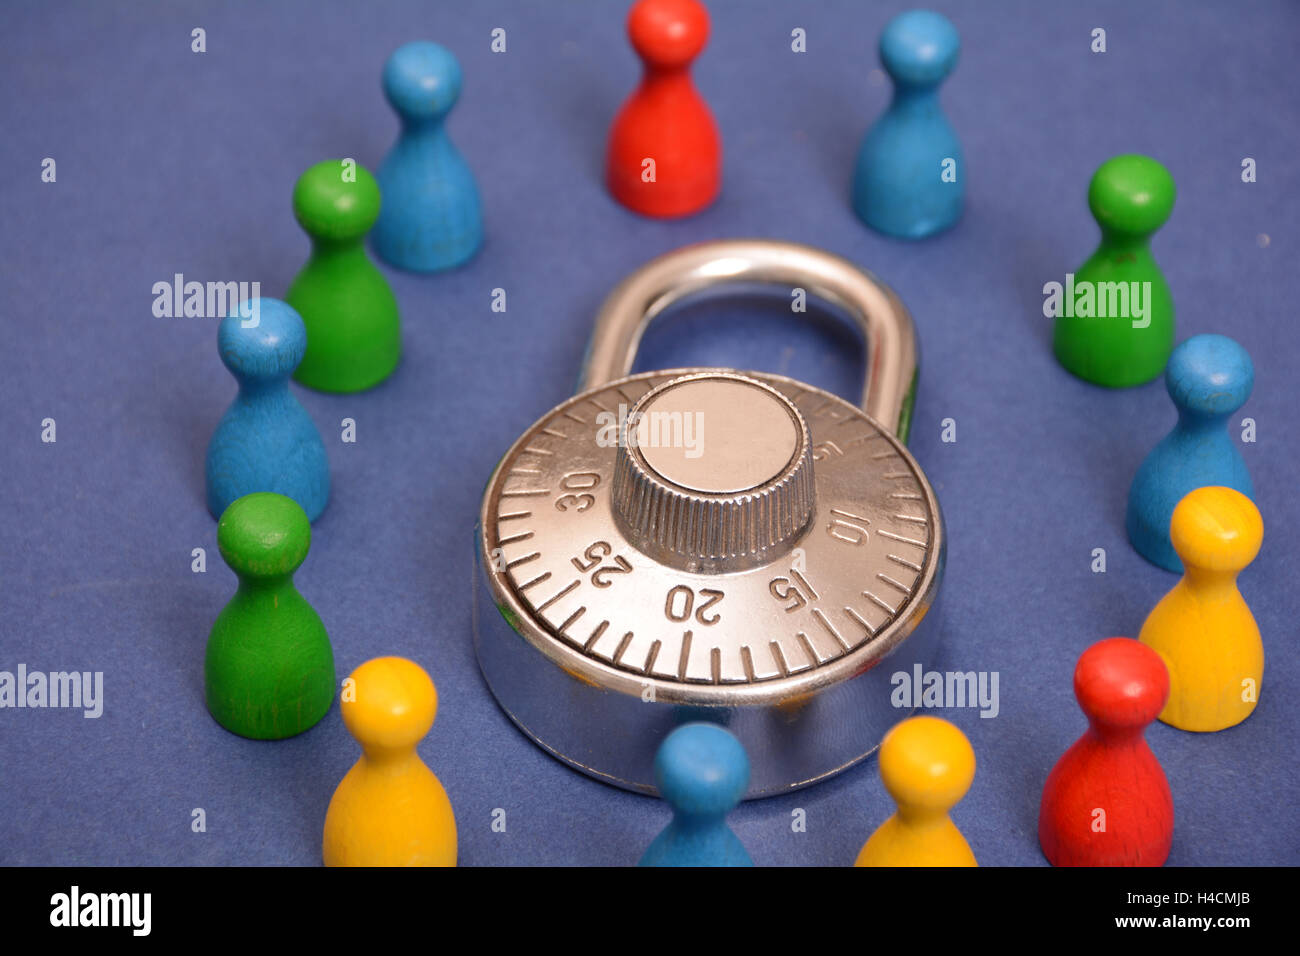 Security Alert Meeting concept with padlock. Stock Photo